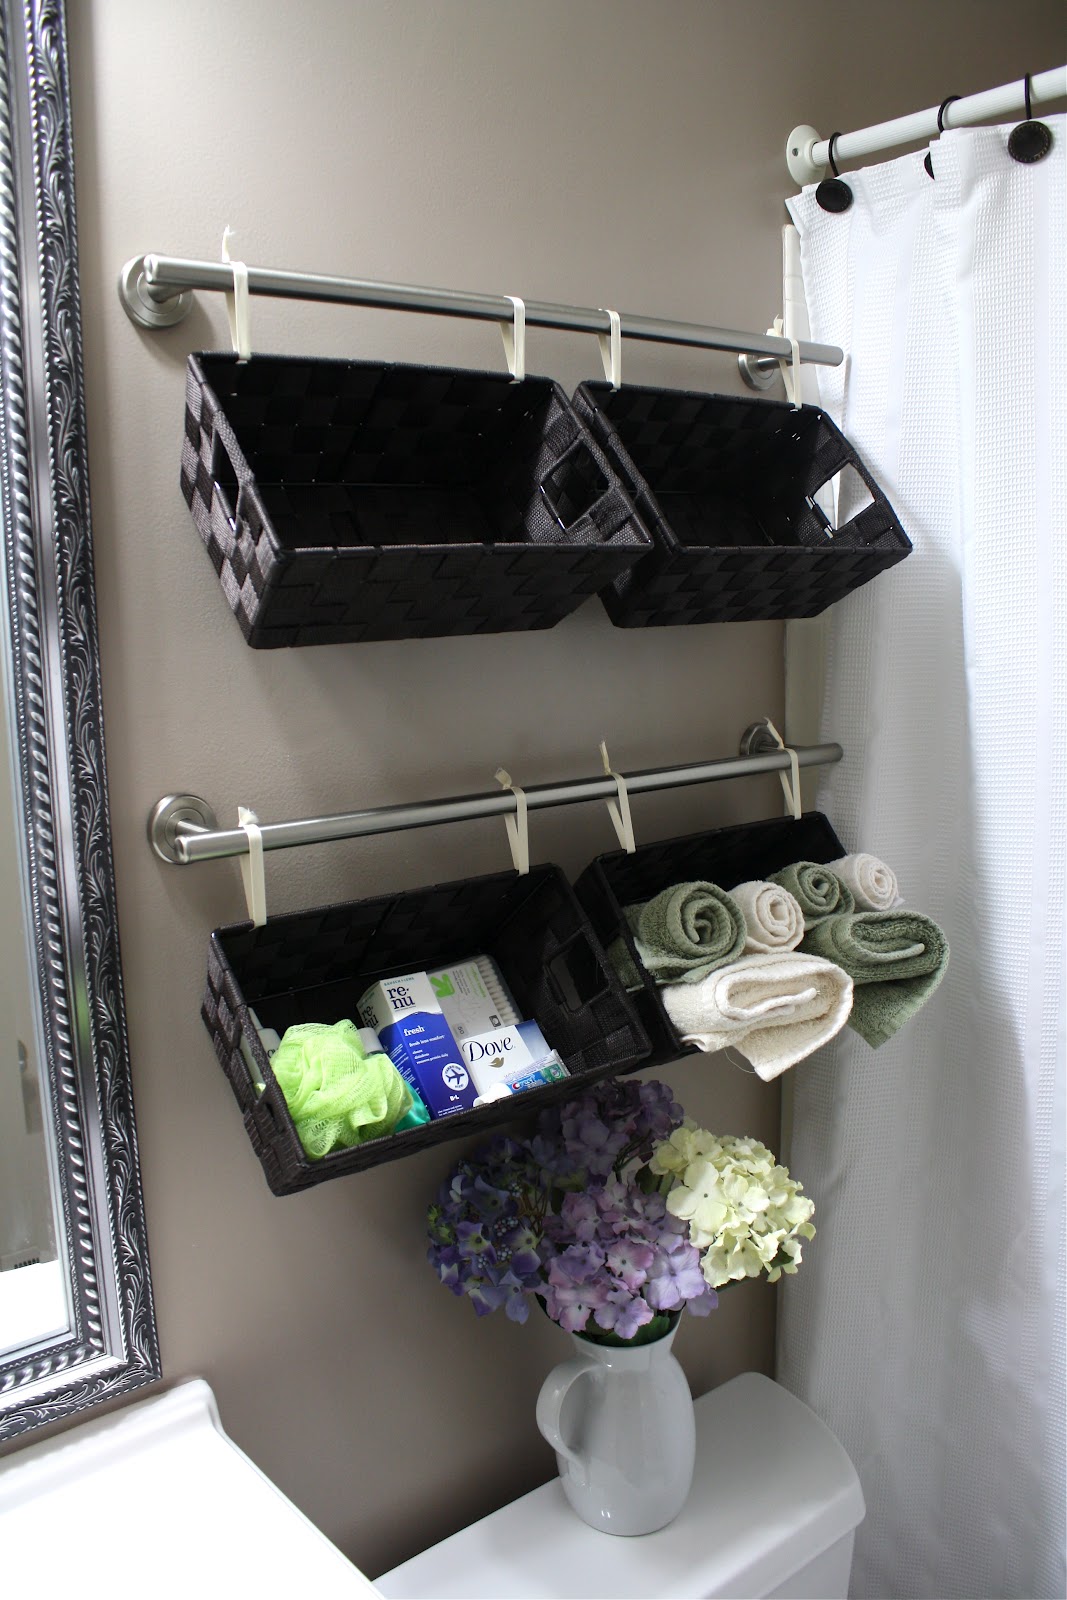 Baskets hanging on towel bars above toilet